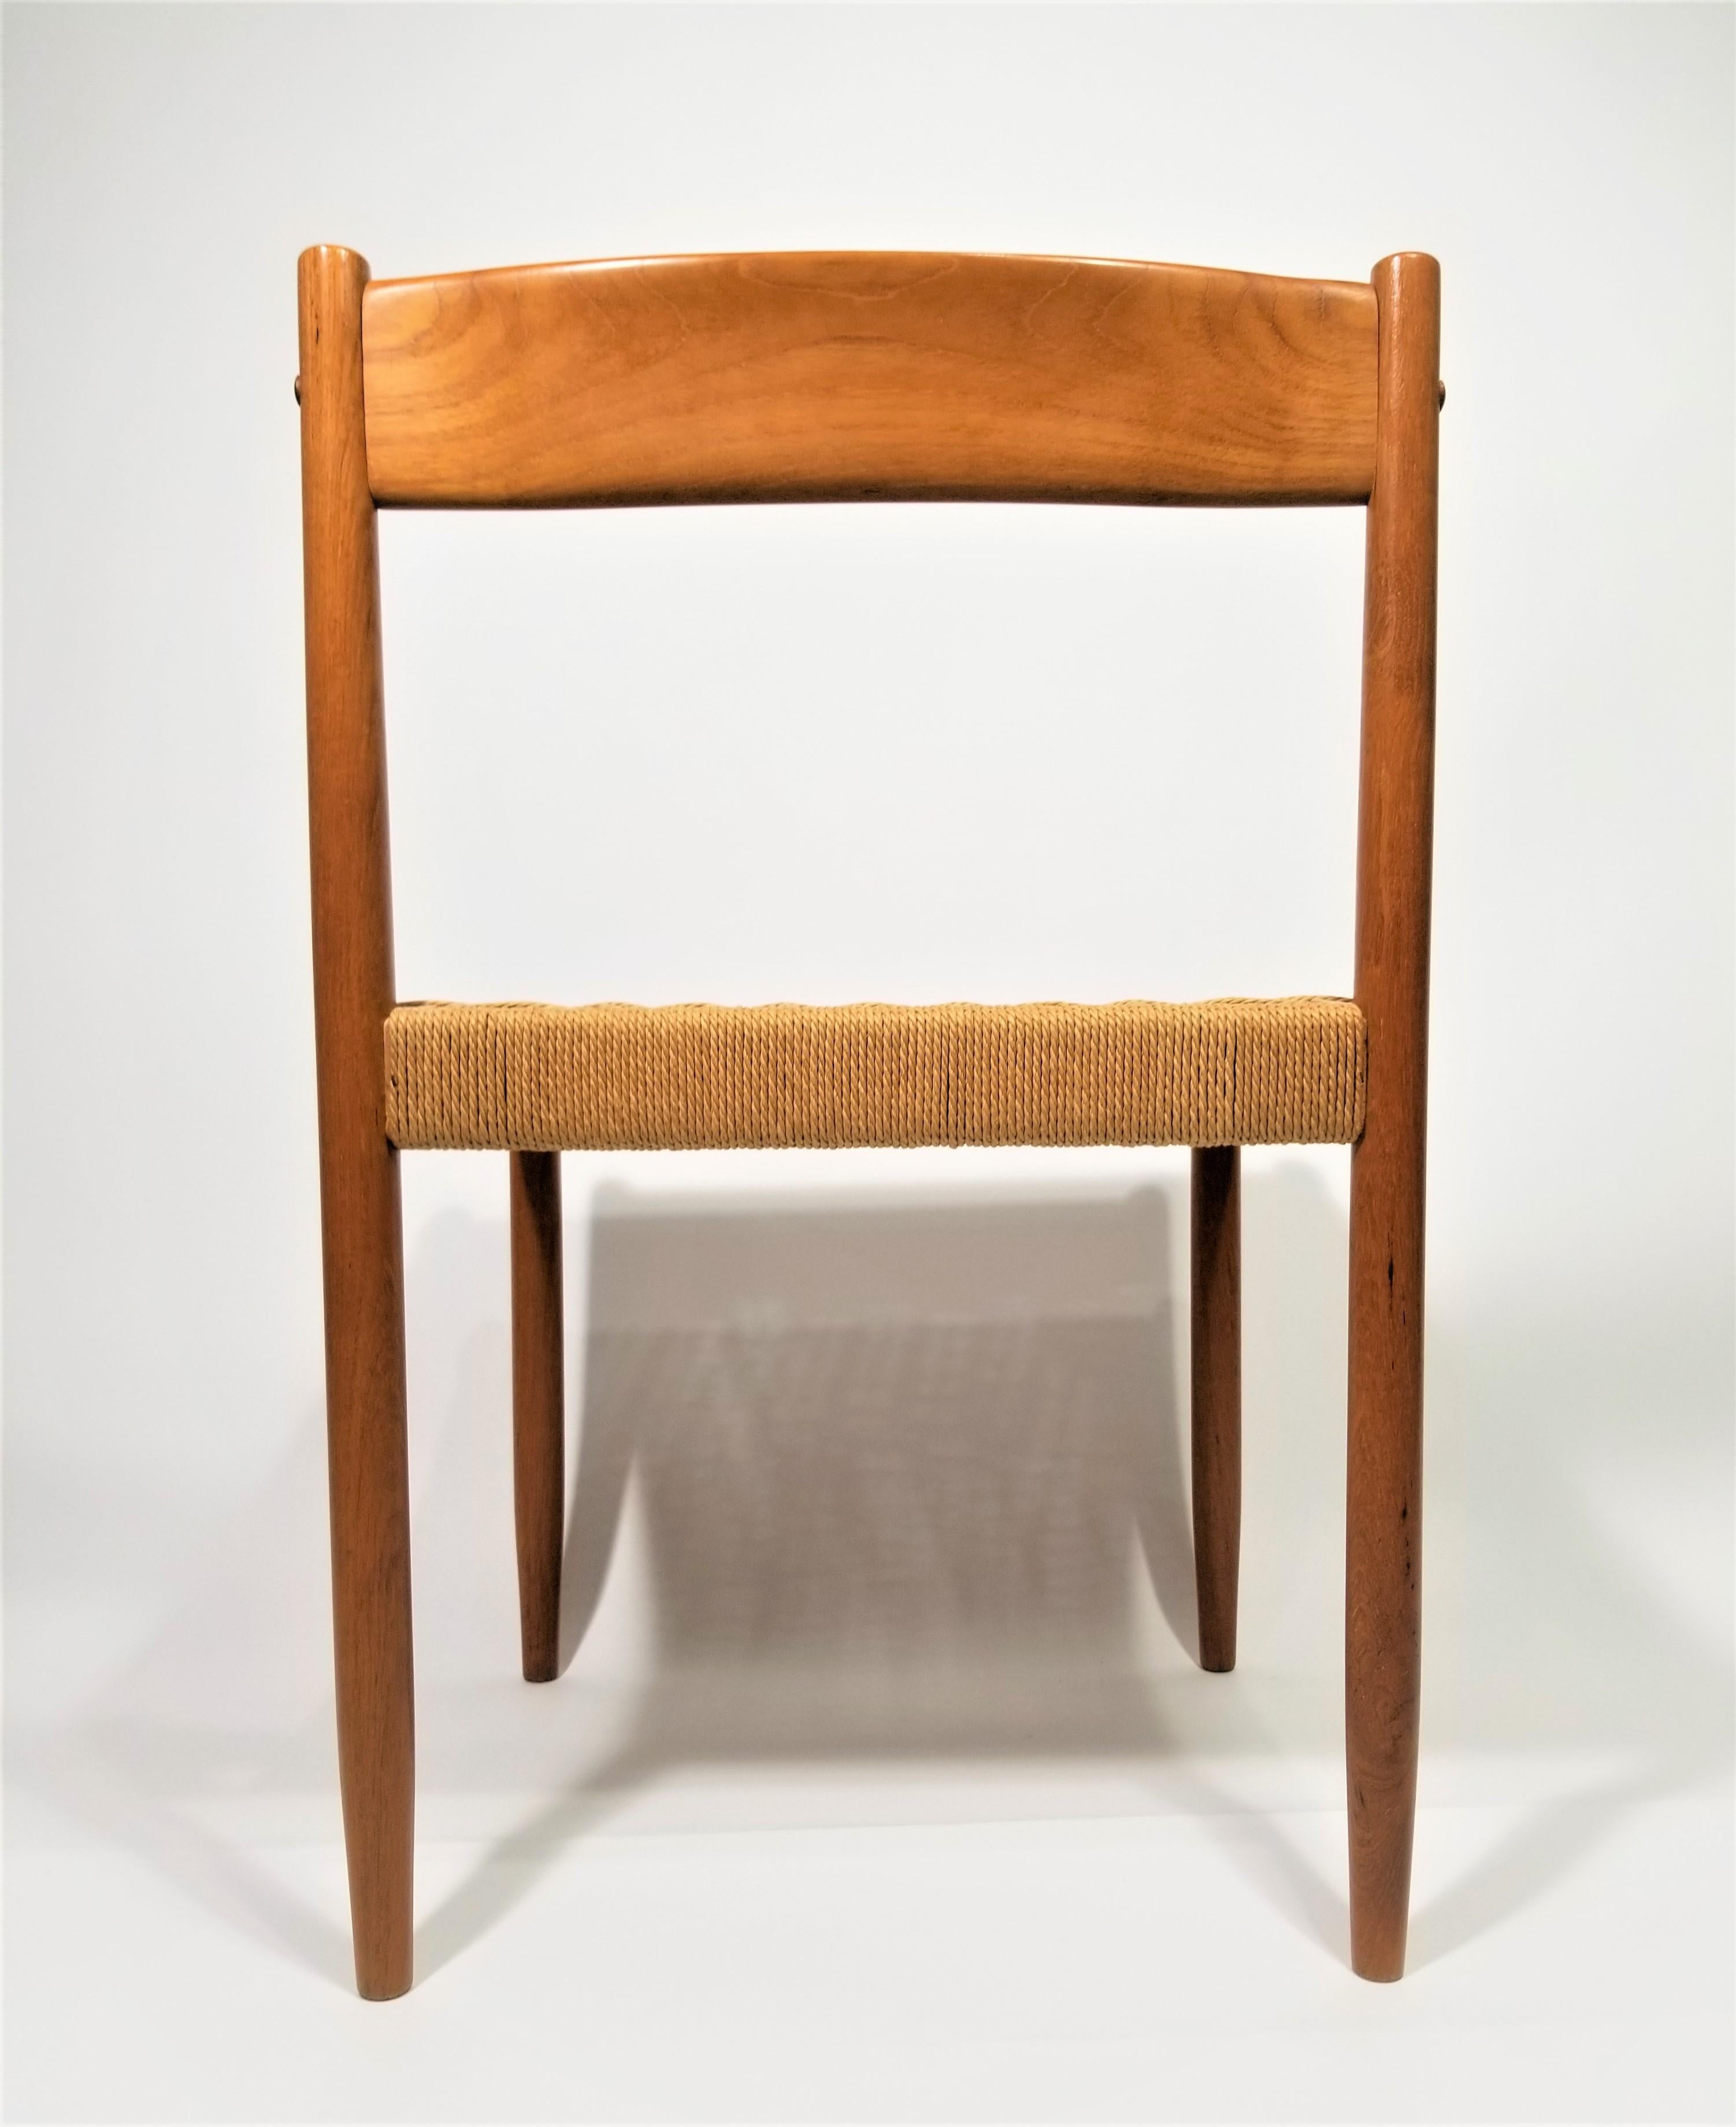 Poul Volther for Frem Rojle Danish Teak Woven Chair Midcentury 1960s  For Sale 7